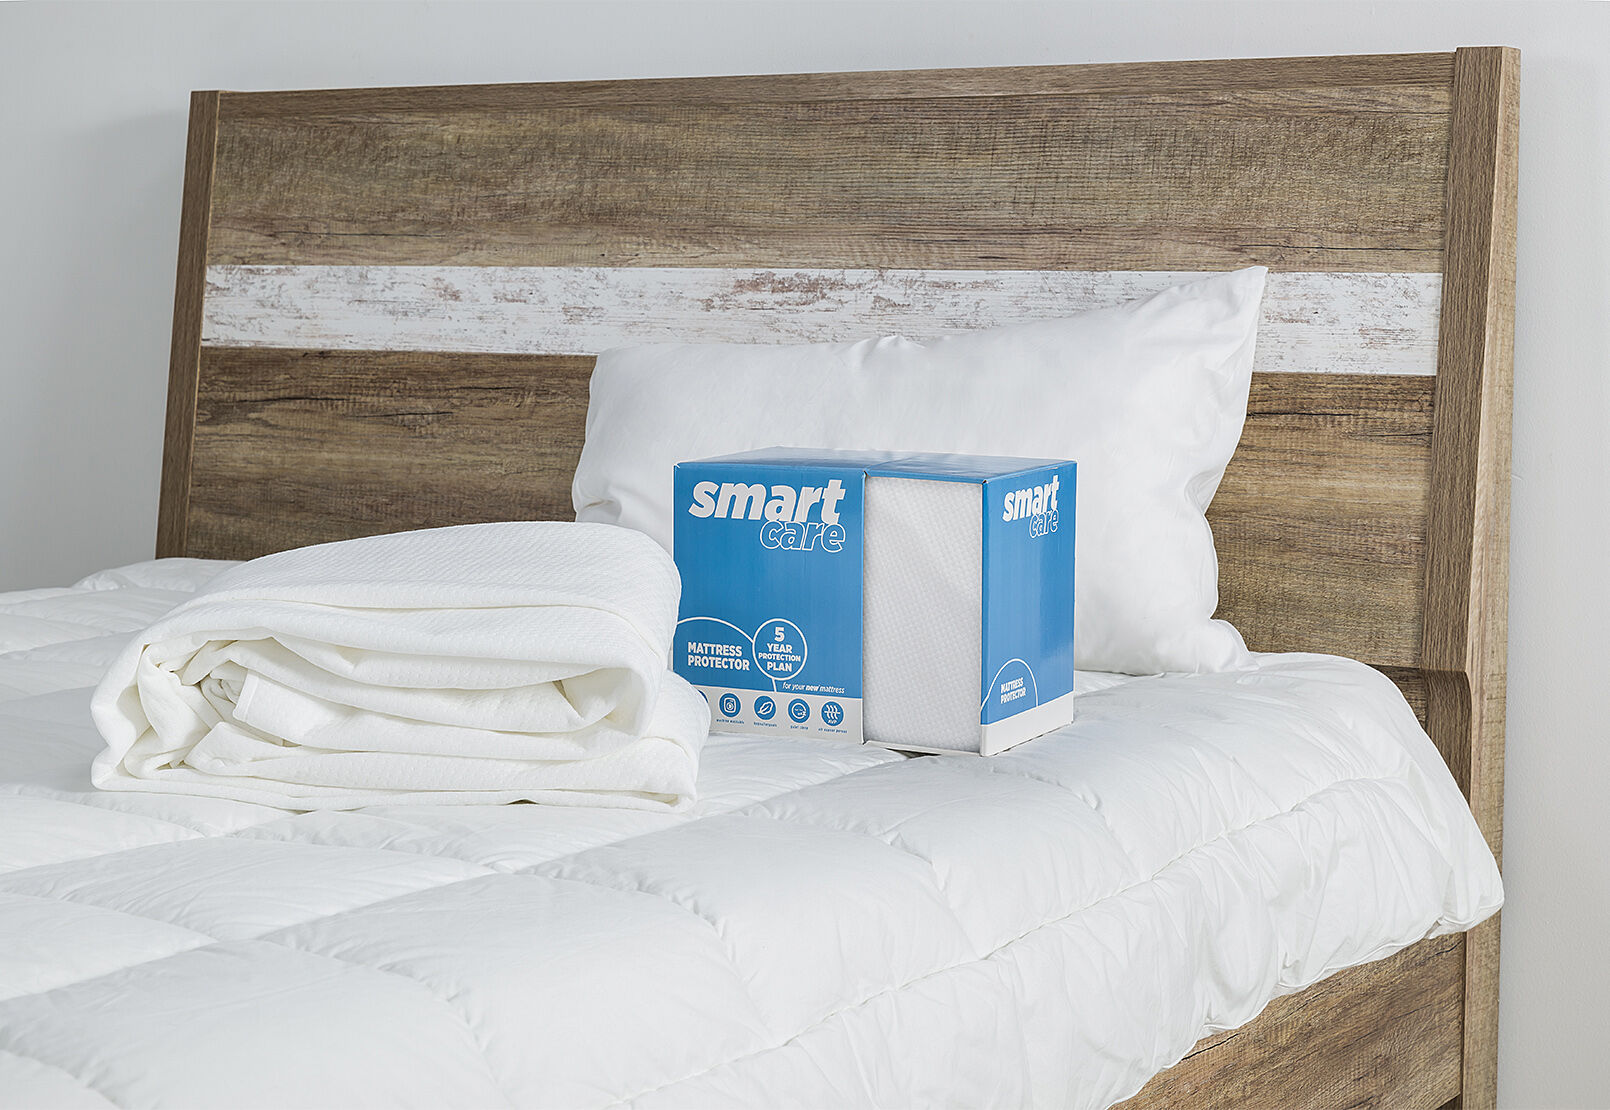 smart care mattress protector